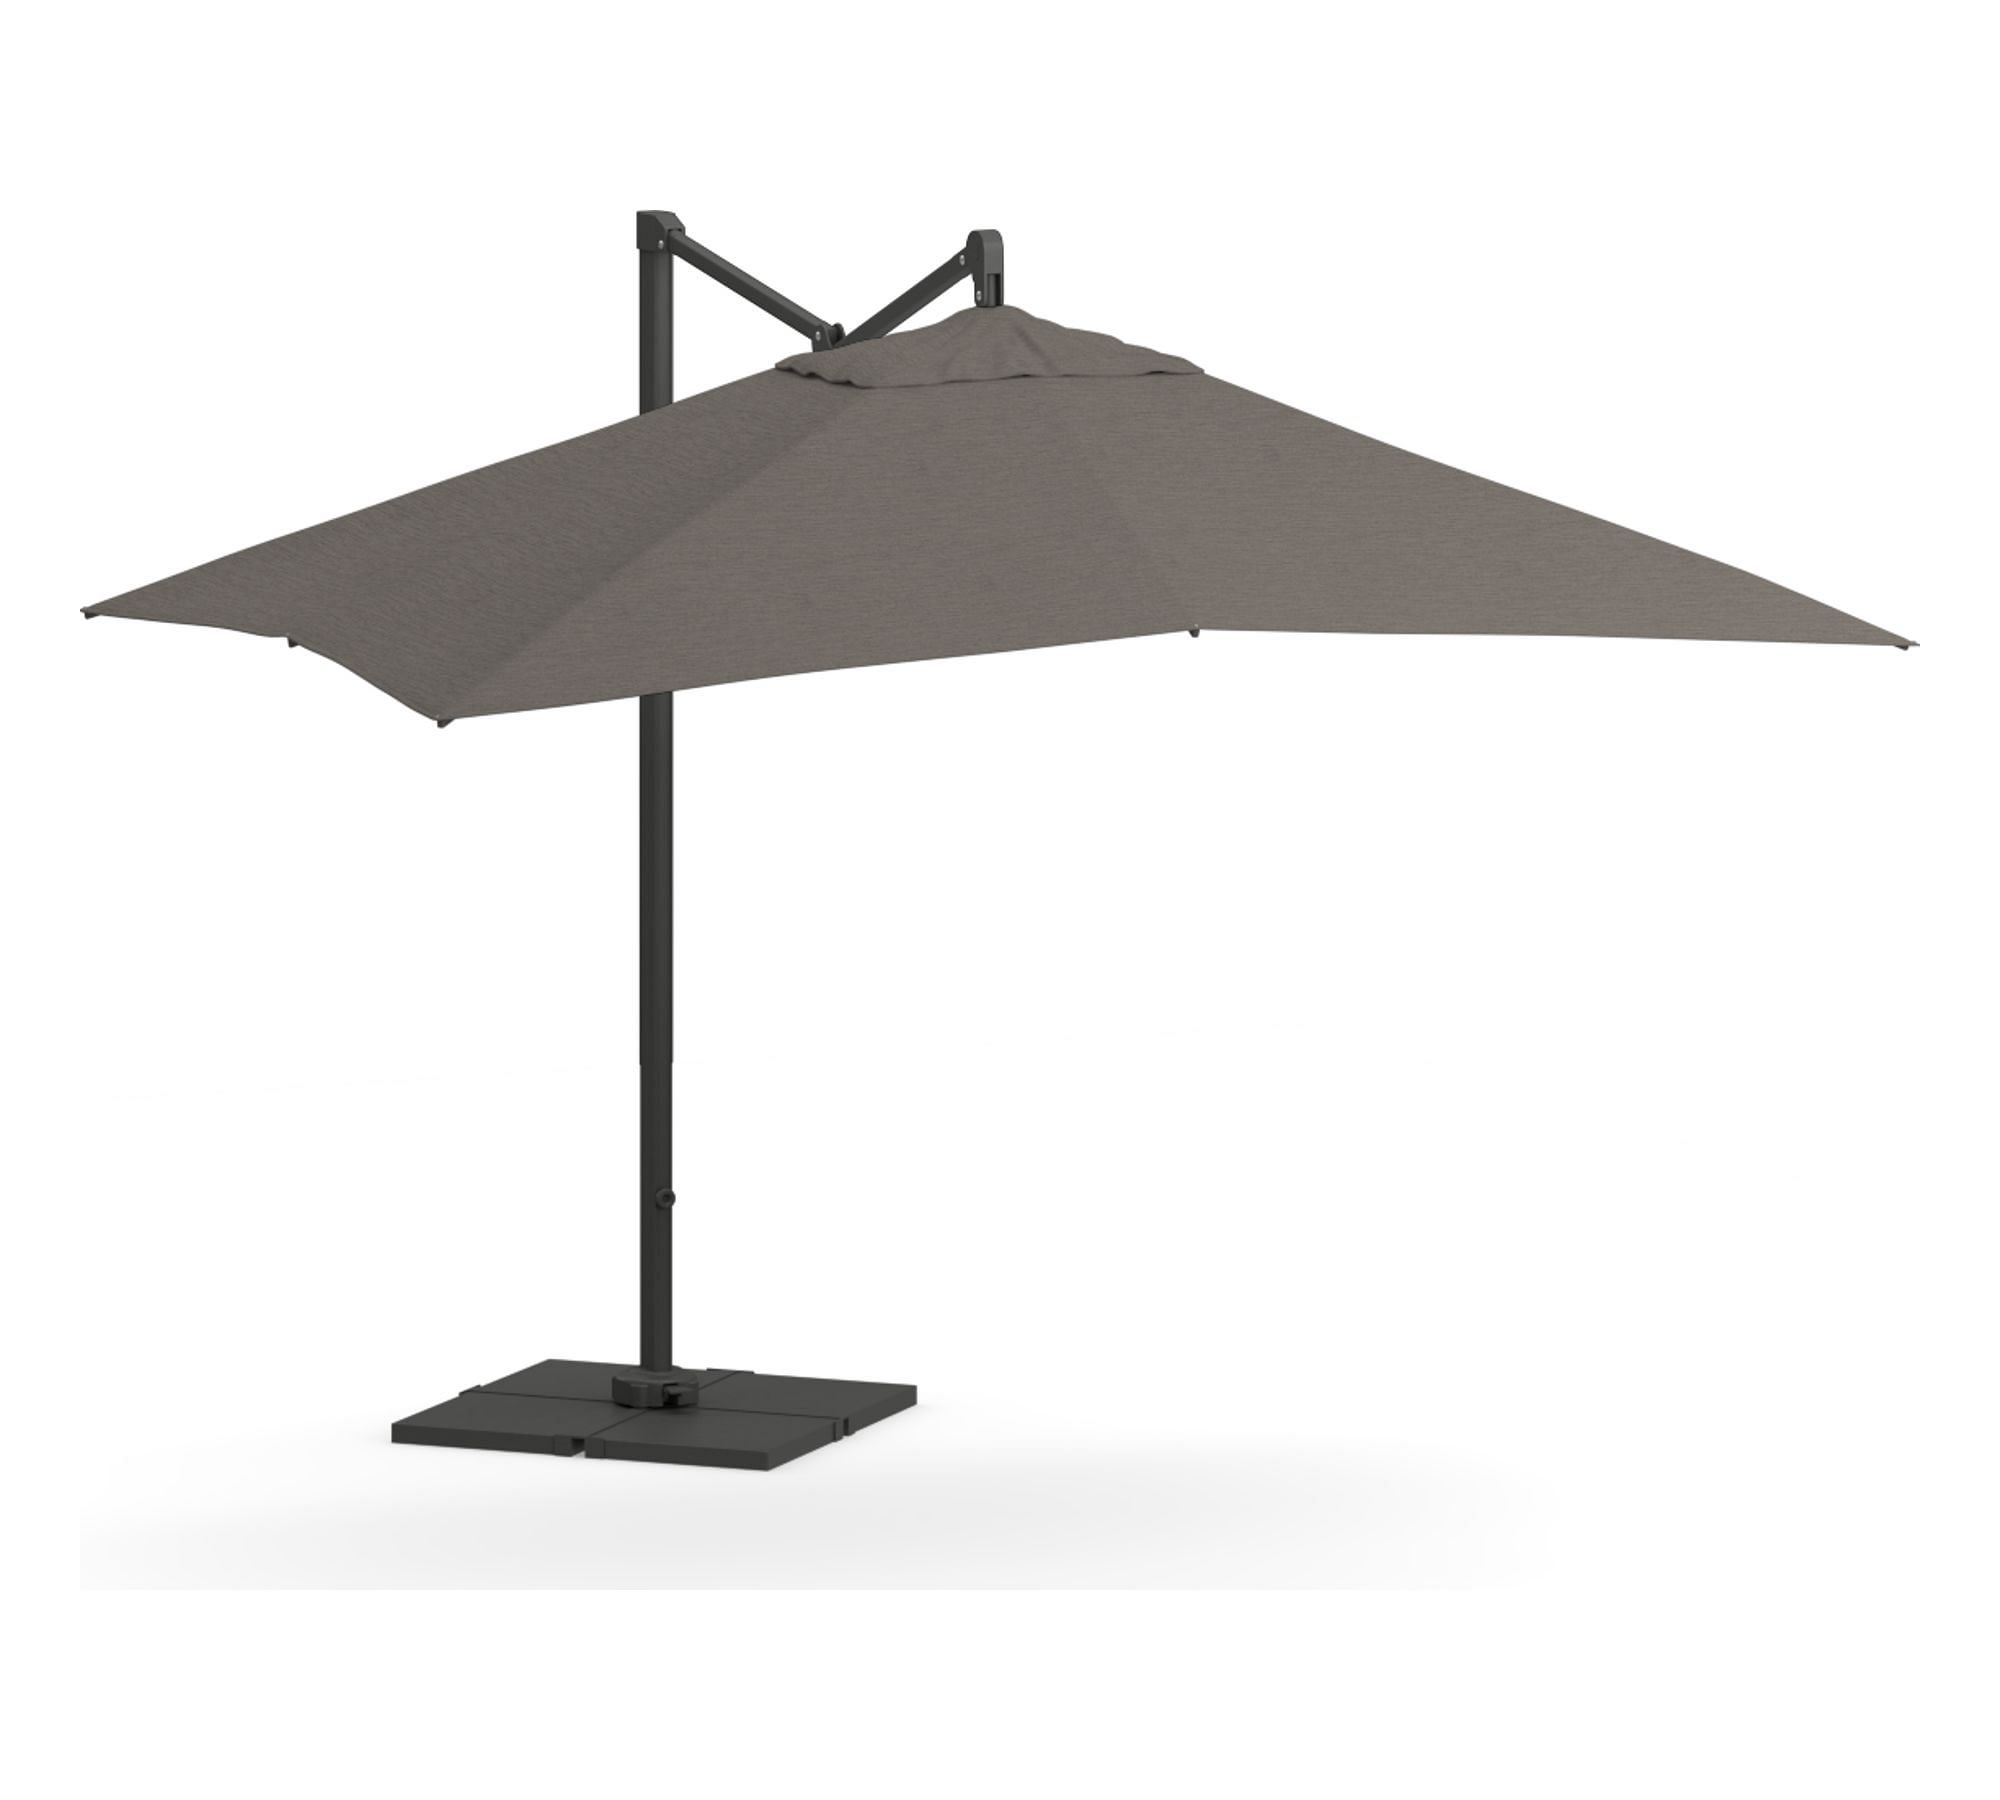 10' Rectangular Cantilever Outdoor Patio Umbrella - Rustproof Aluminum Frame with Base